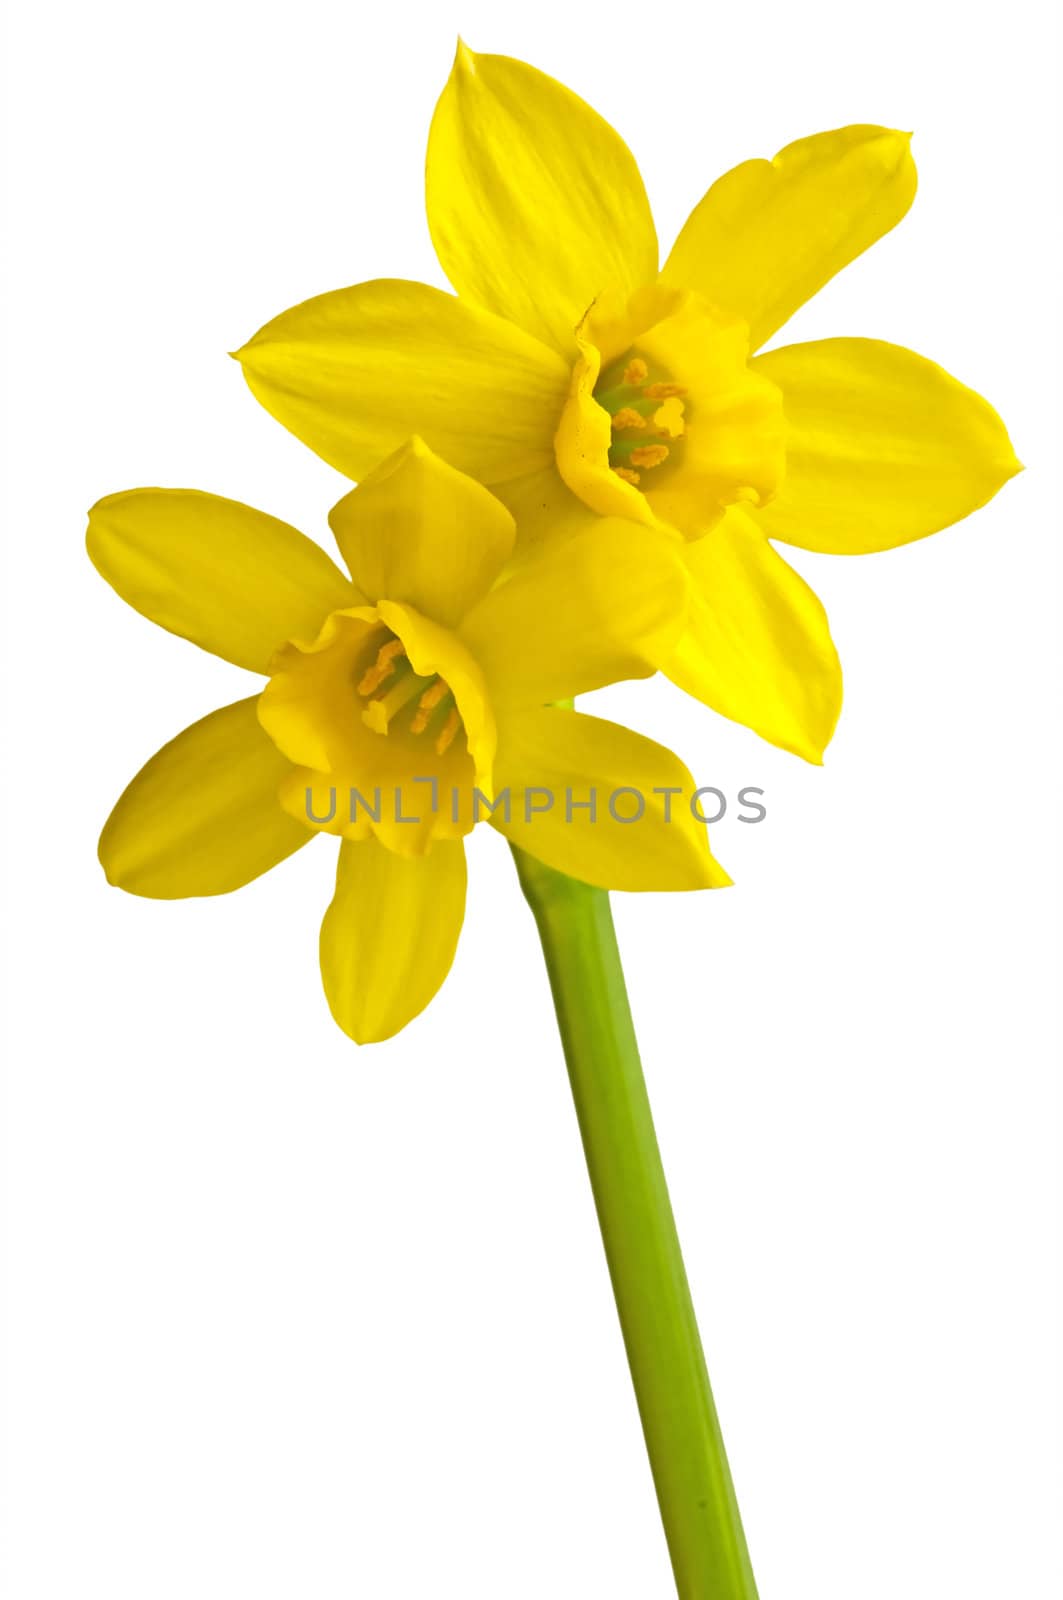 Daffodil by Jochen